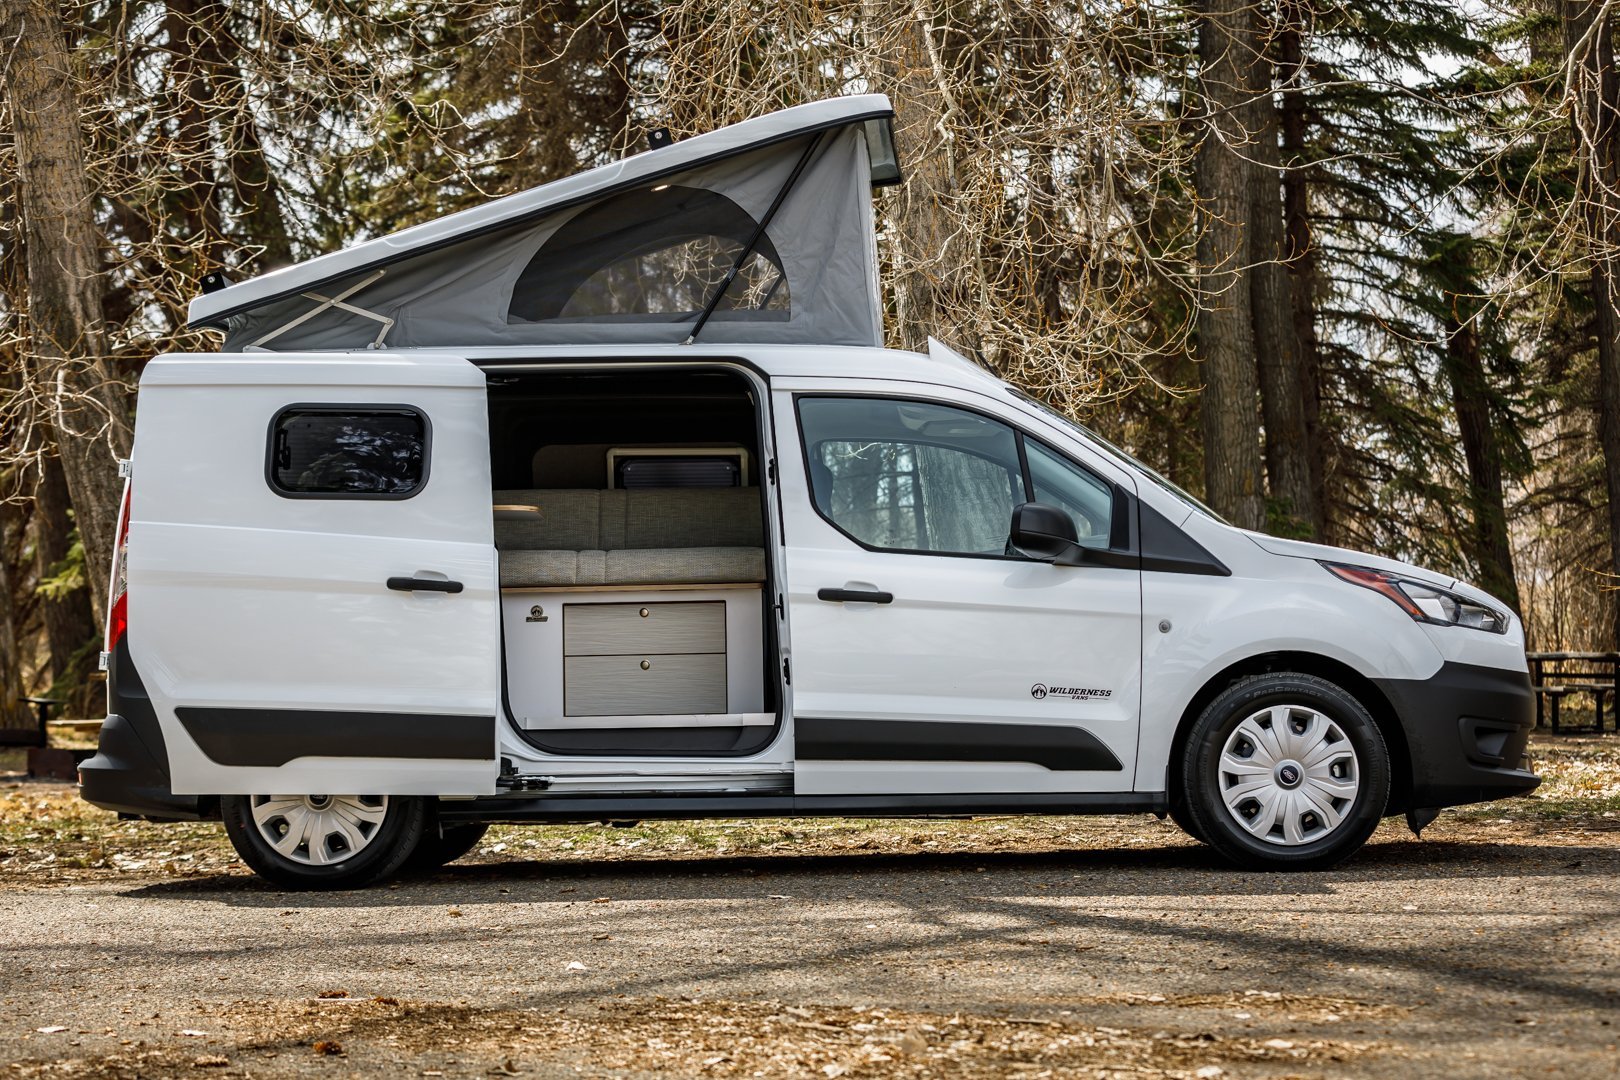 2022 Ford Transit Connect #0193 - Ledge Mini - Wilderness Vans